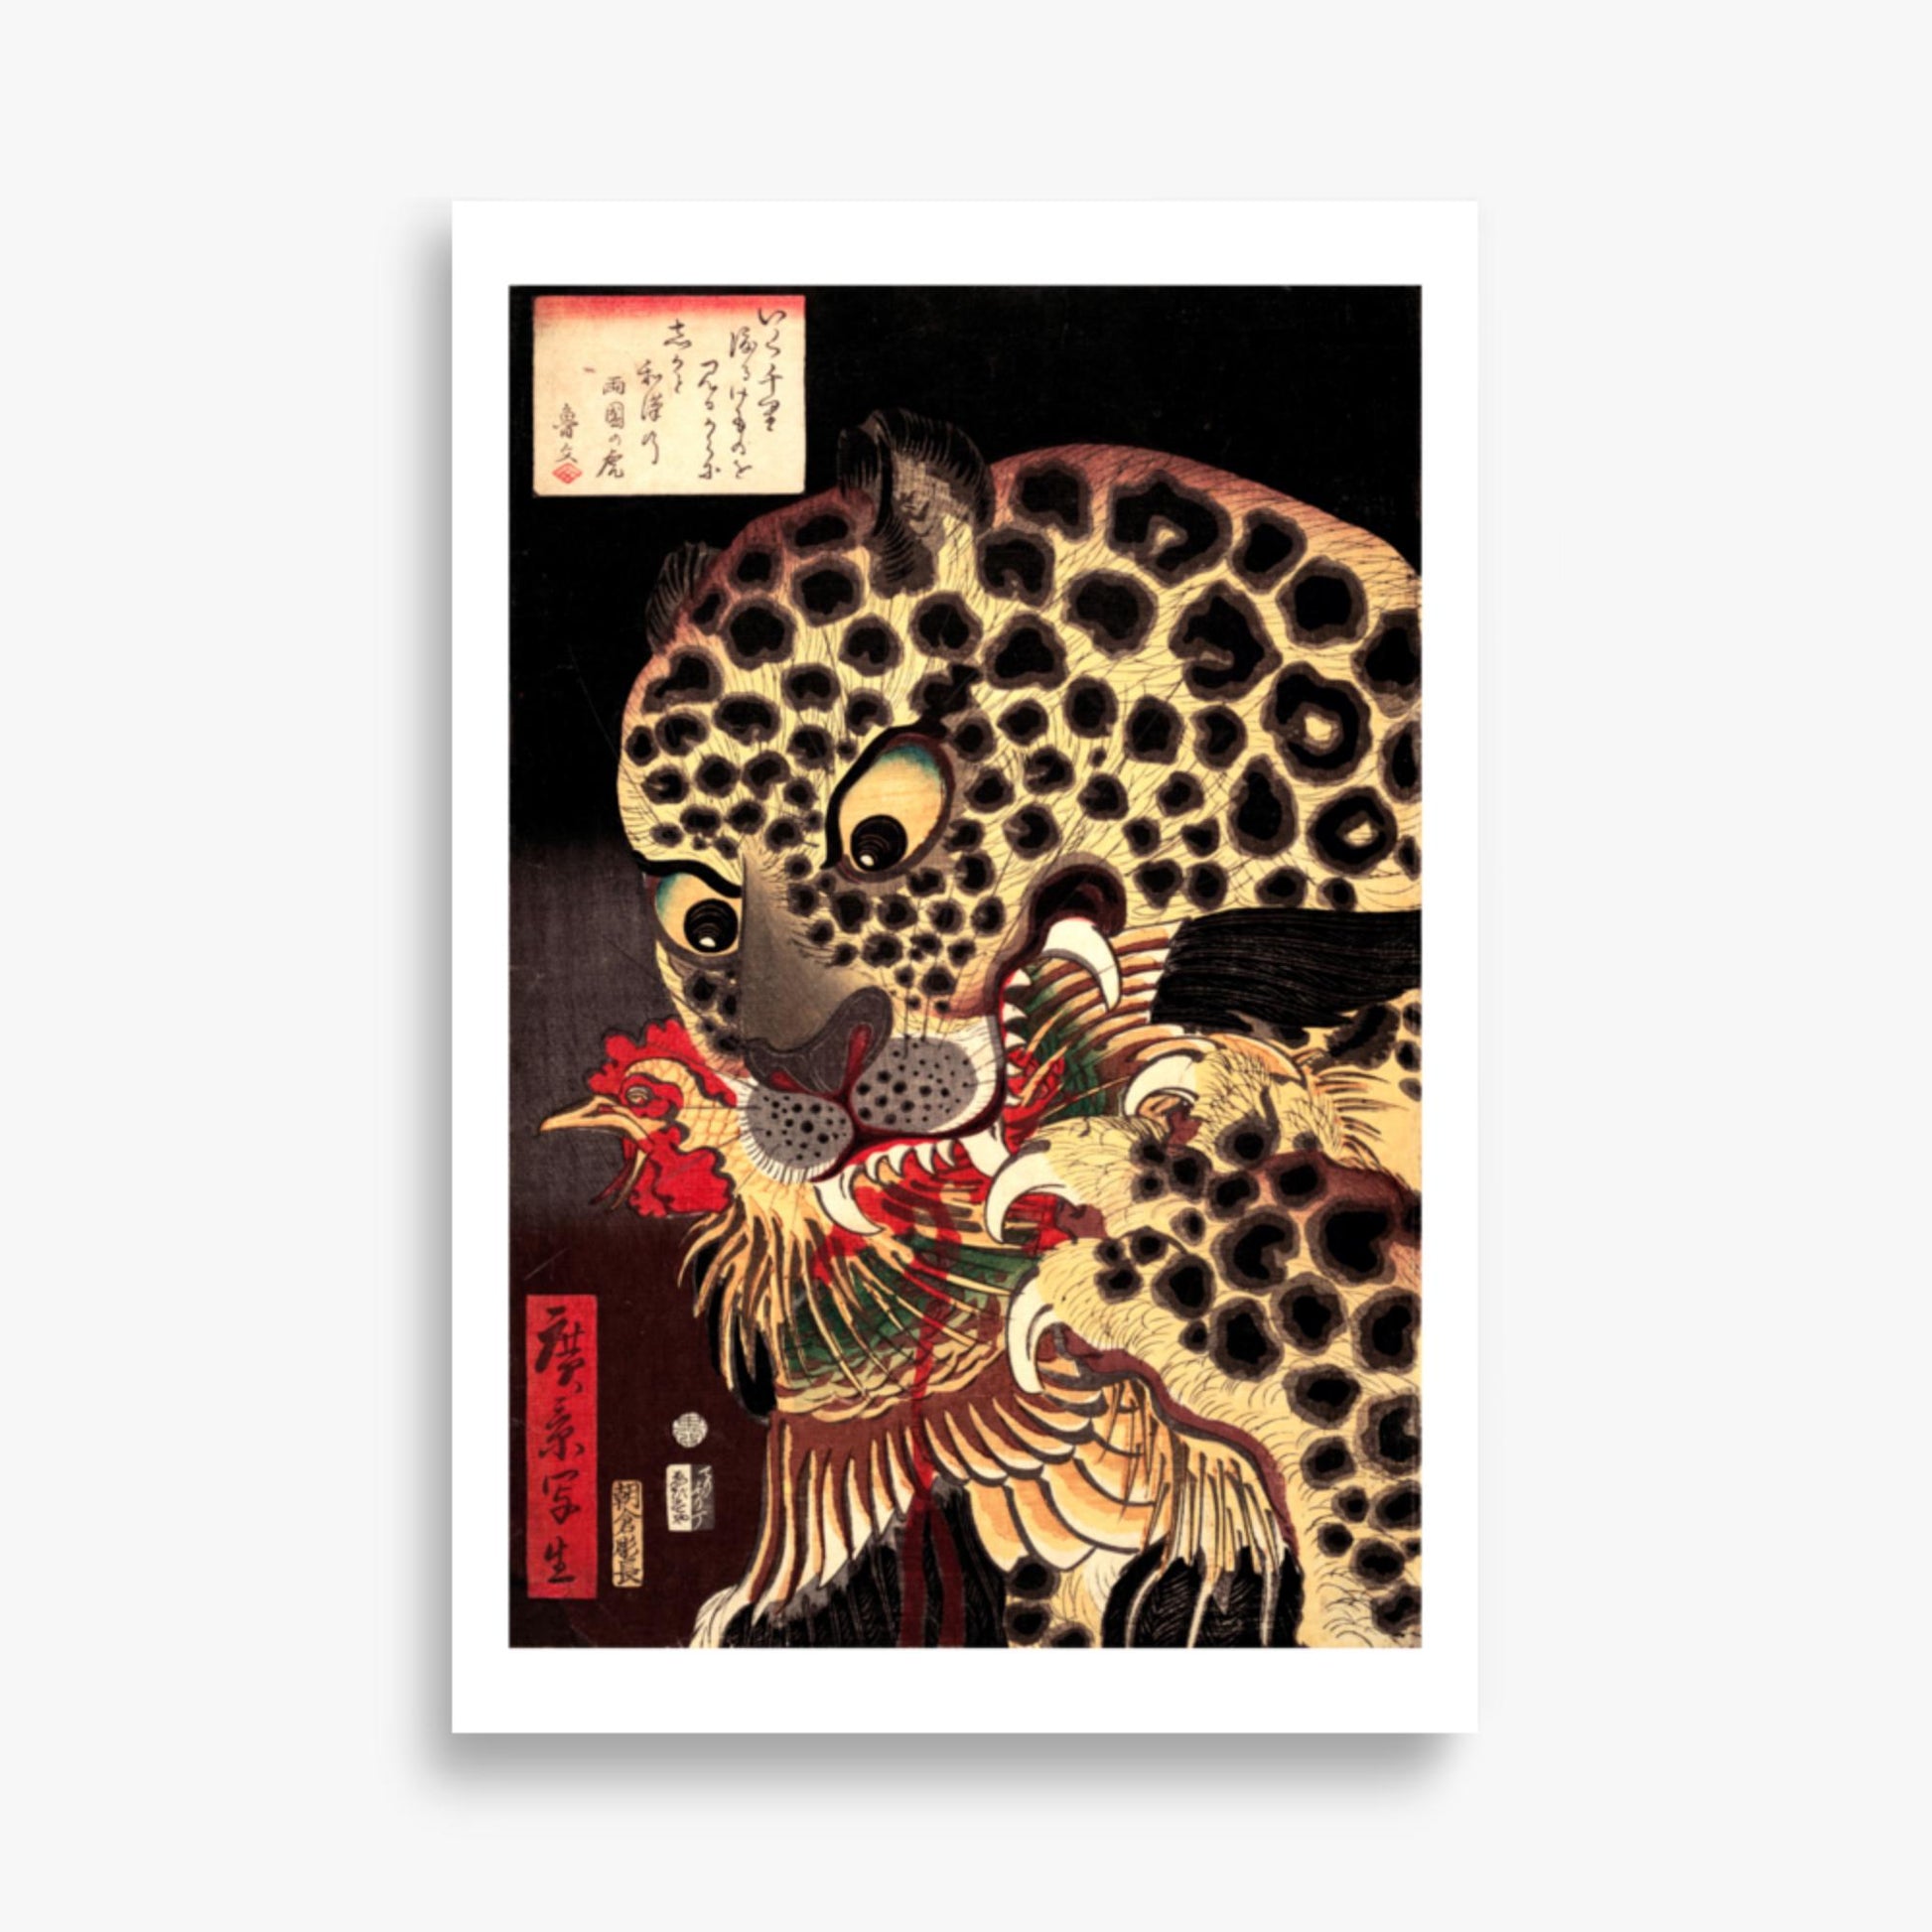 Utagawa Hirokage - The Tiger of Ryōkoku 61x91 cm Poster